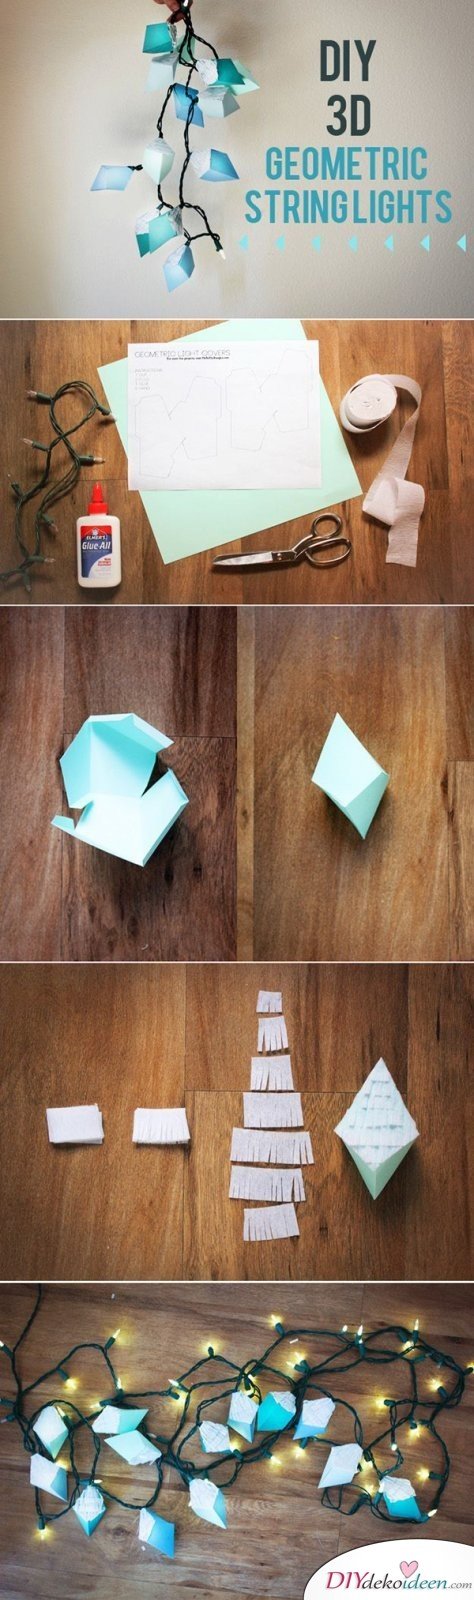 15 Bastelideen DIY Lampen selber machen - DIY geometrische Lichterkette 